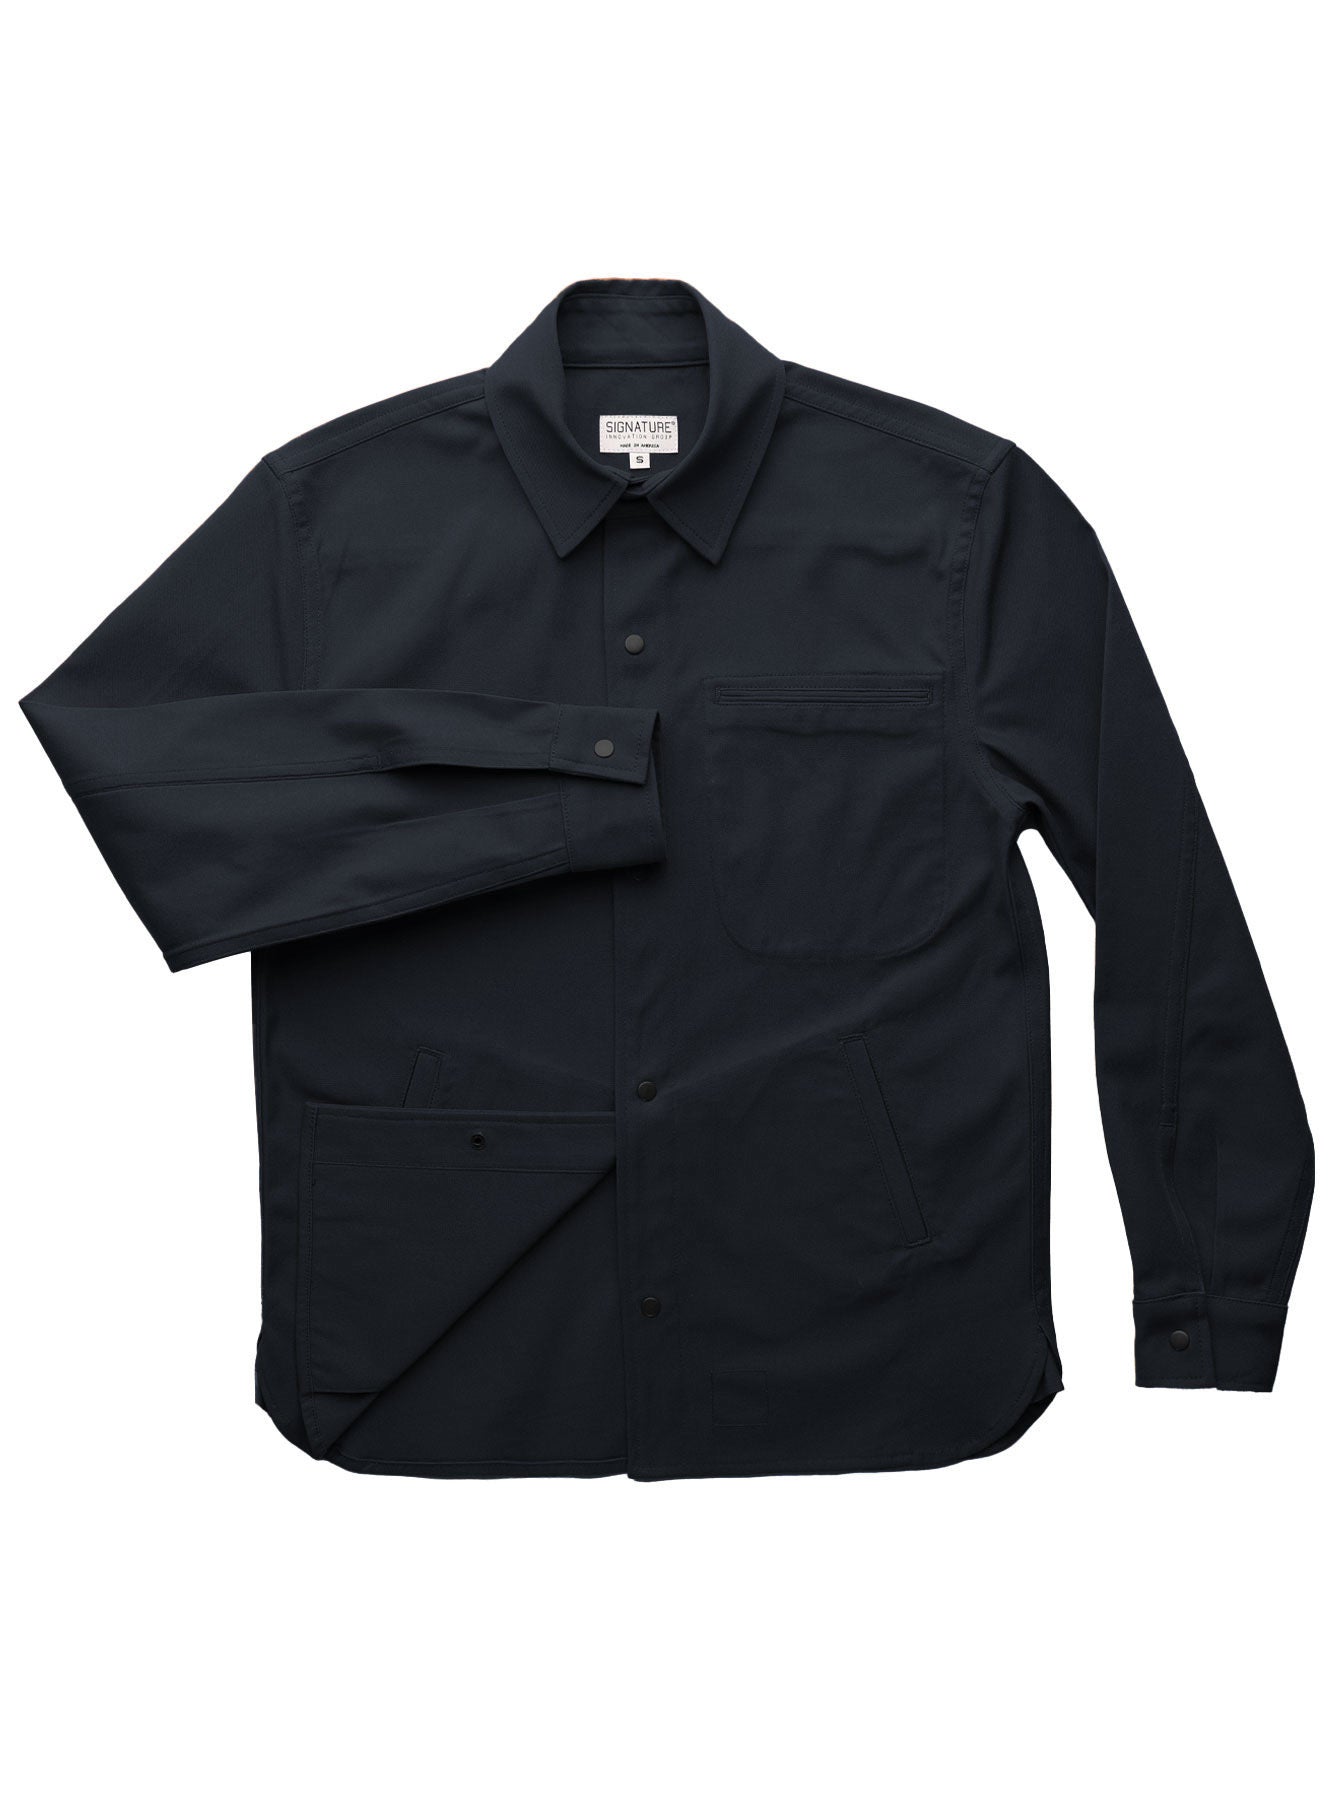 Oxford Shirt Jacket Navy